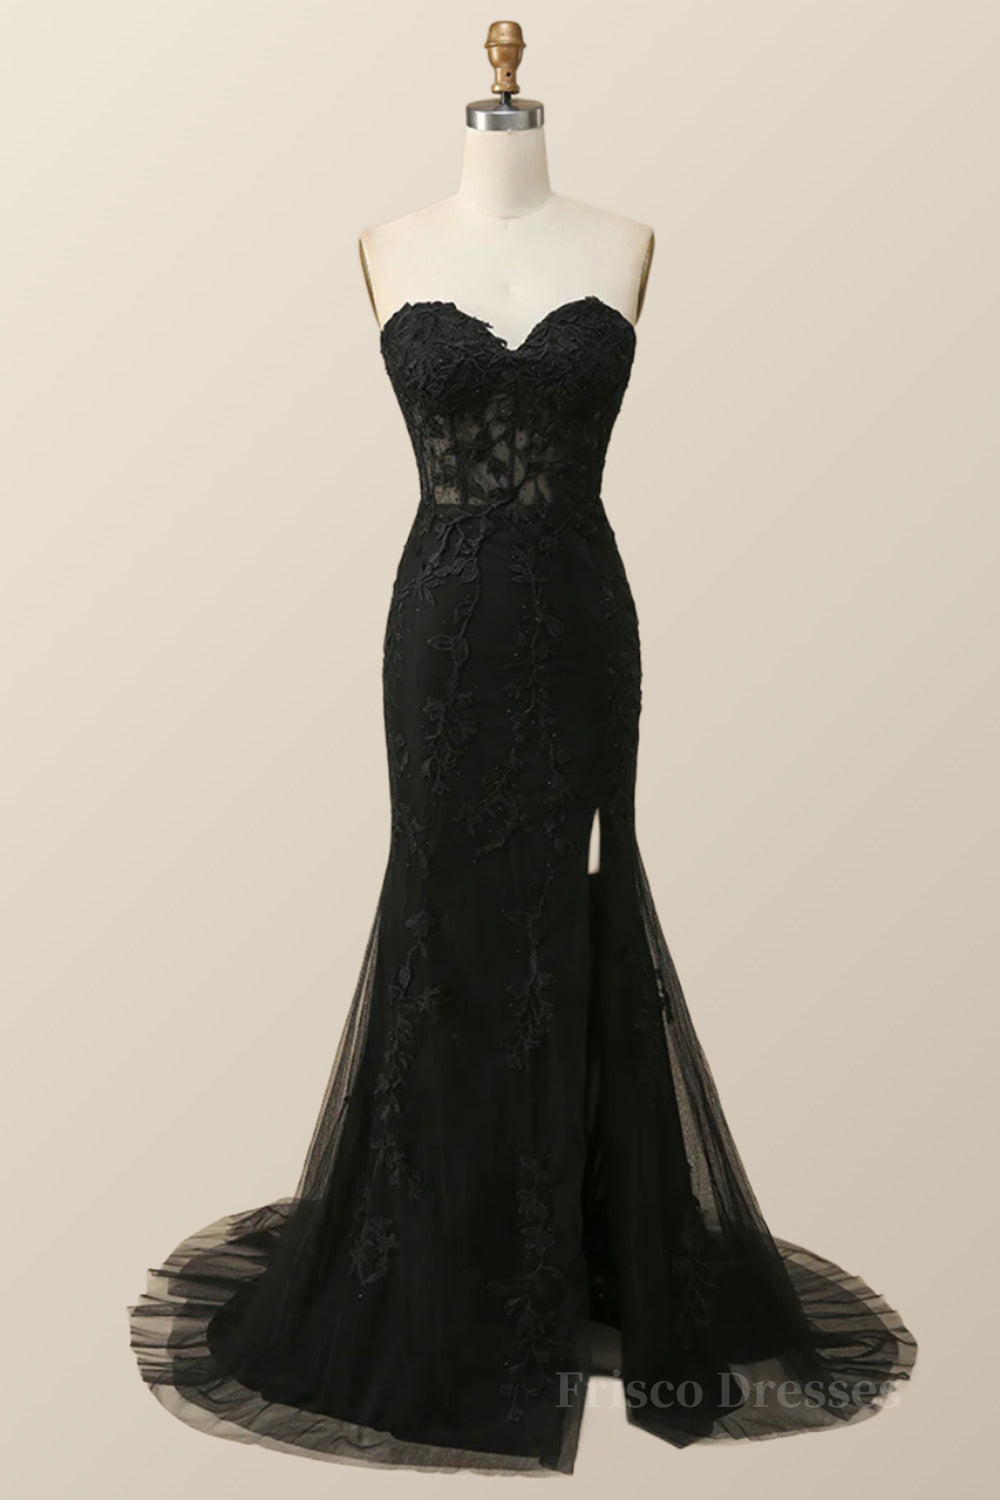 Strapless Black Lace Mermaid Long Prom Dress